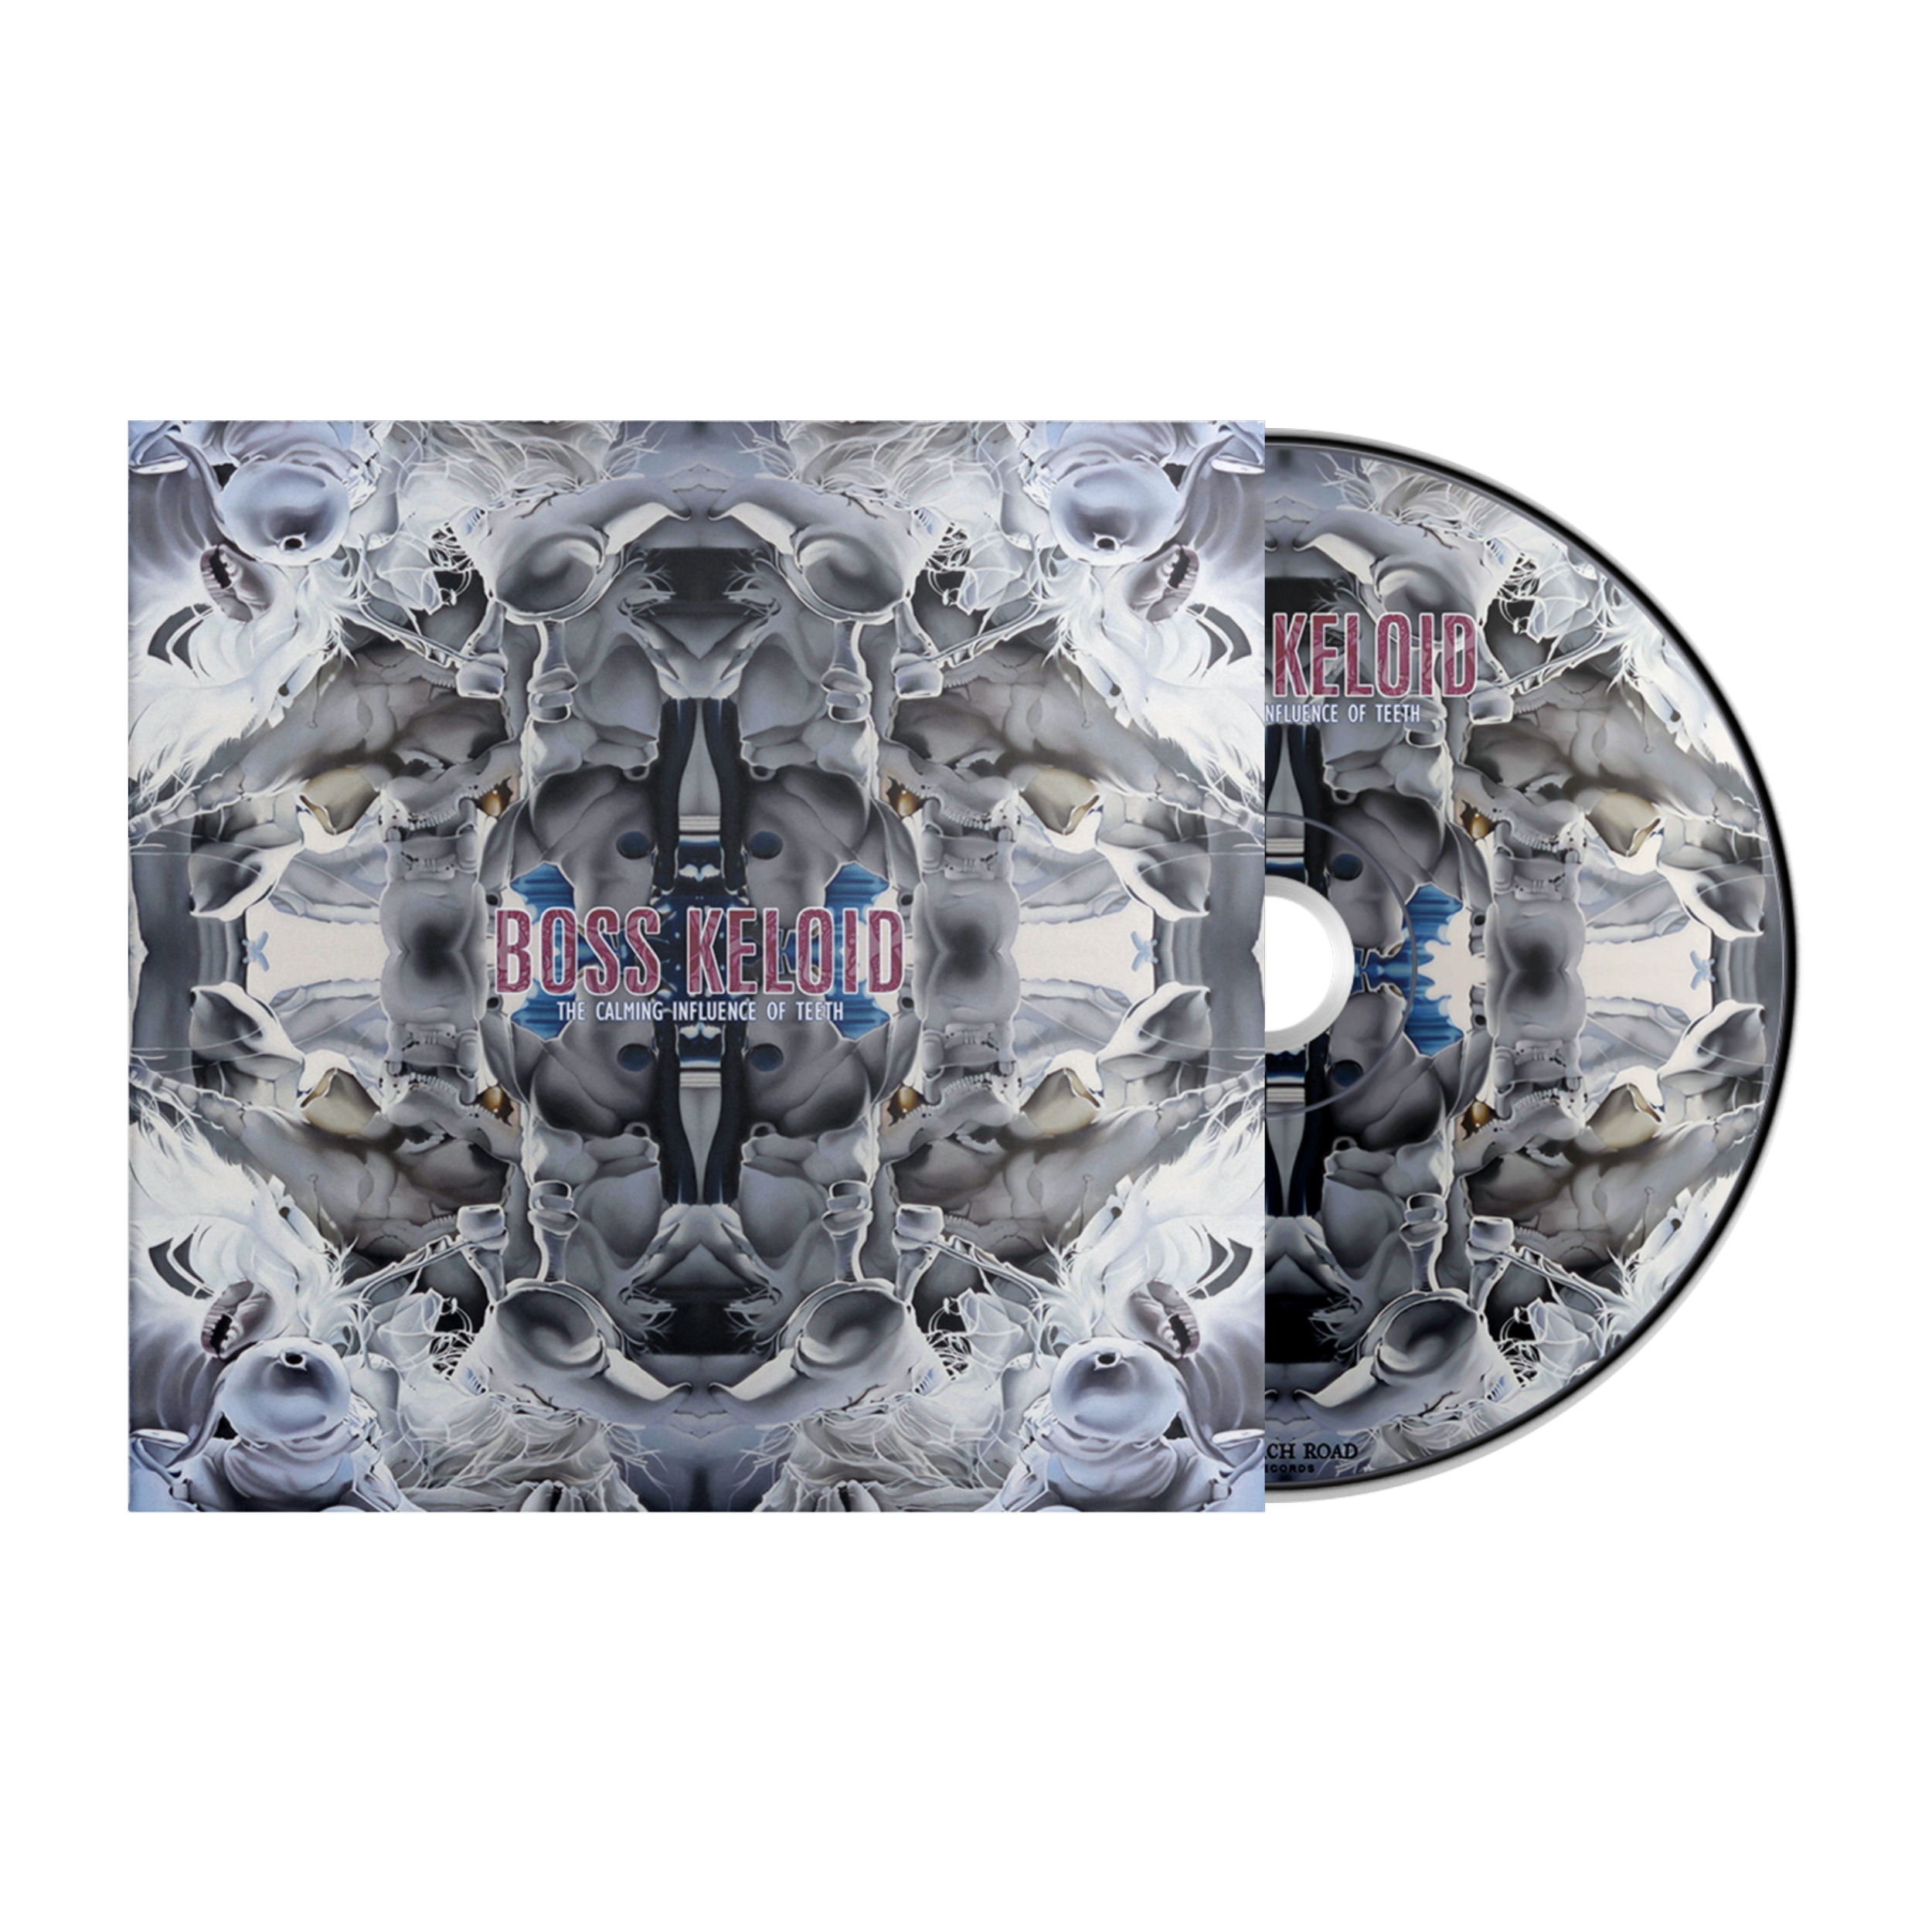 Boss Keloid - The Calming Influence Of Teeth - CD.png